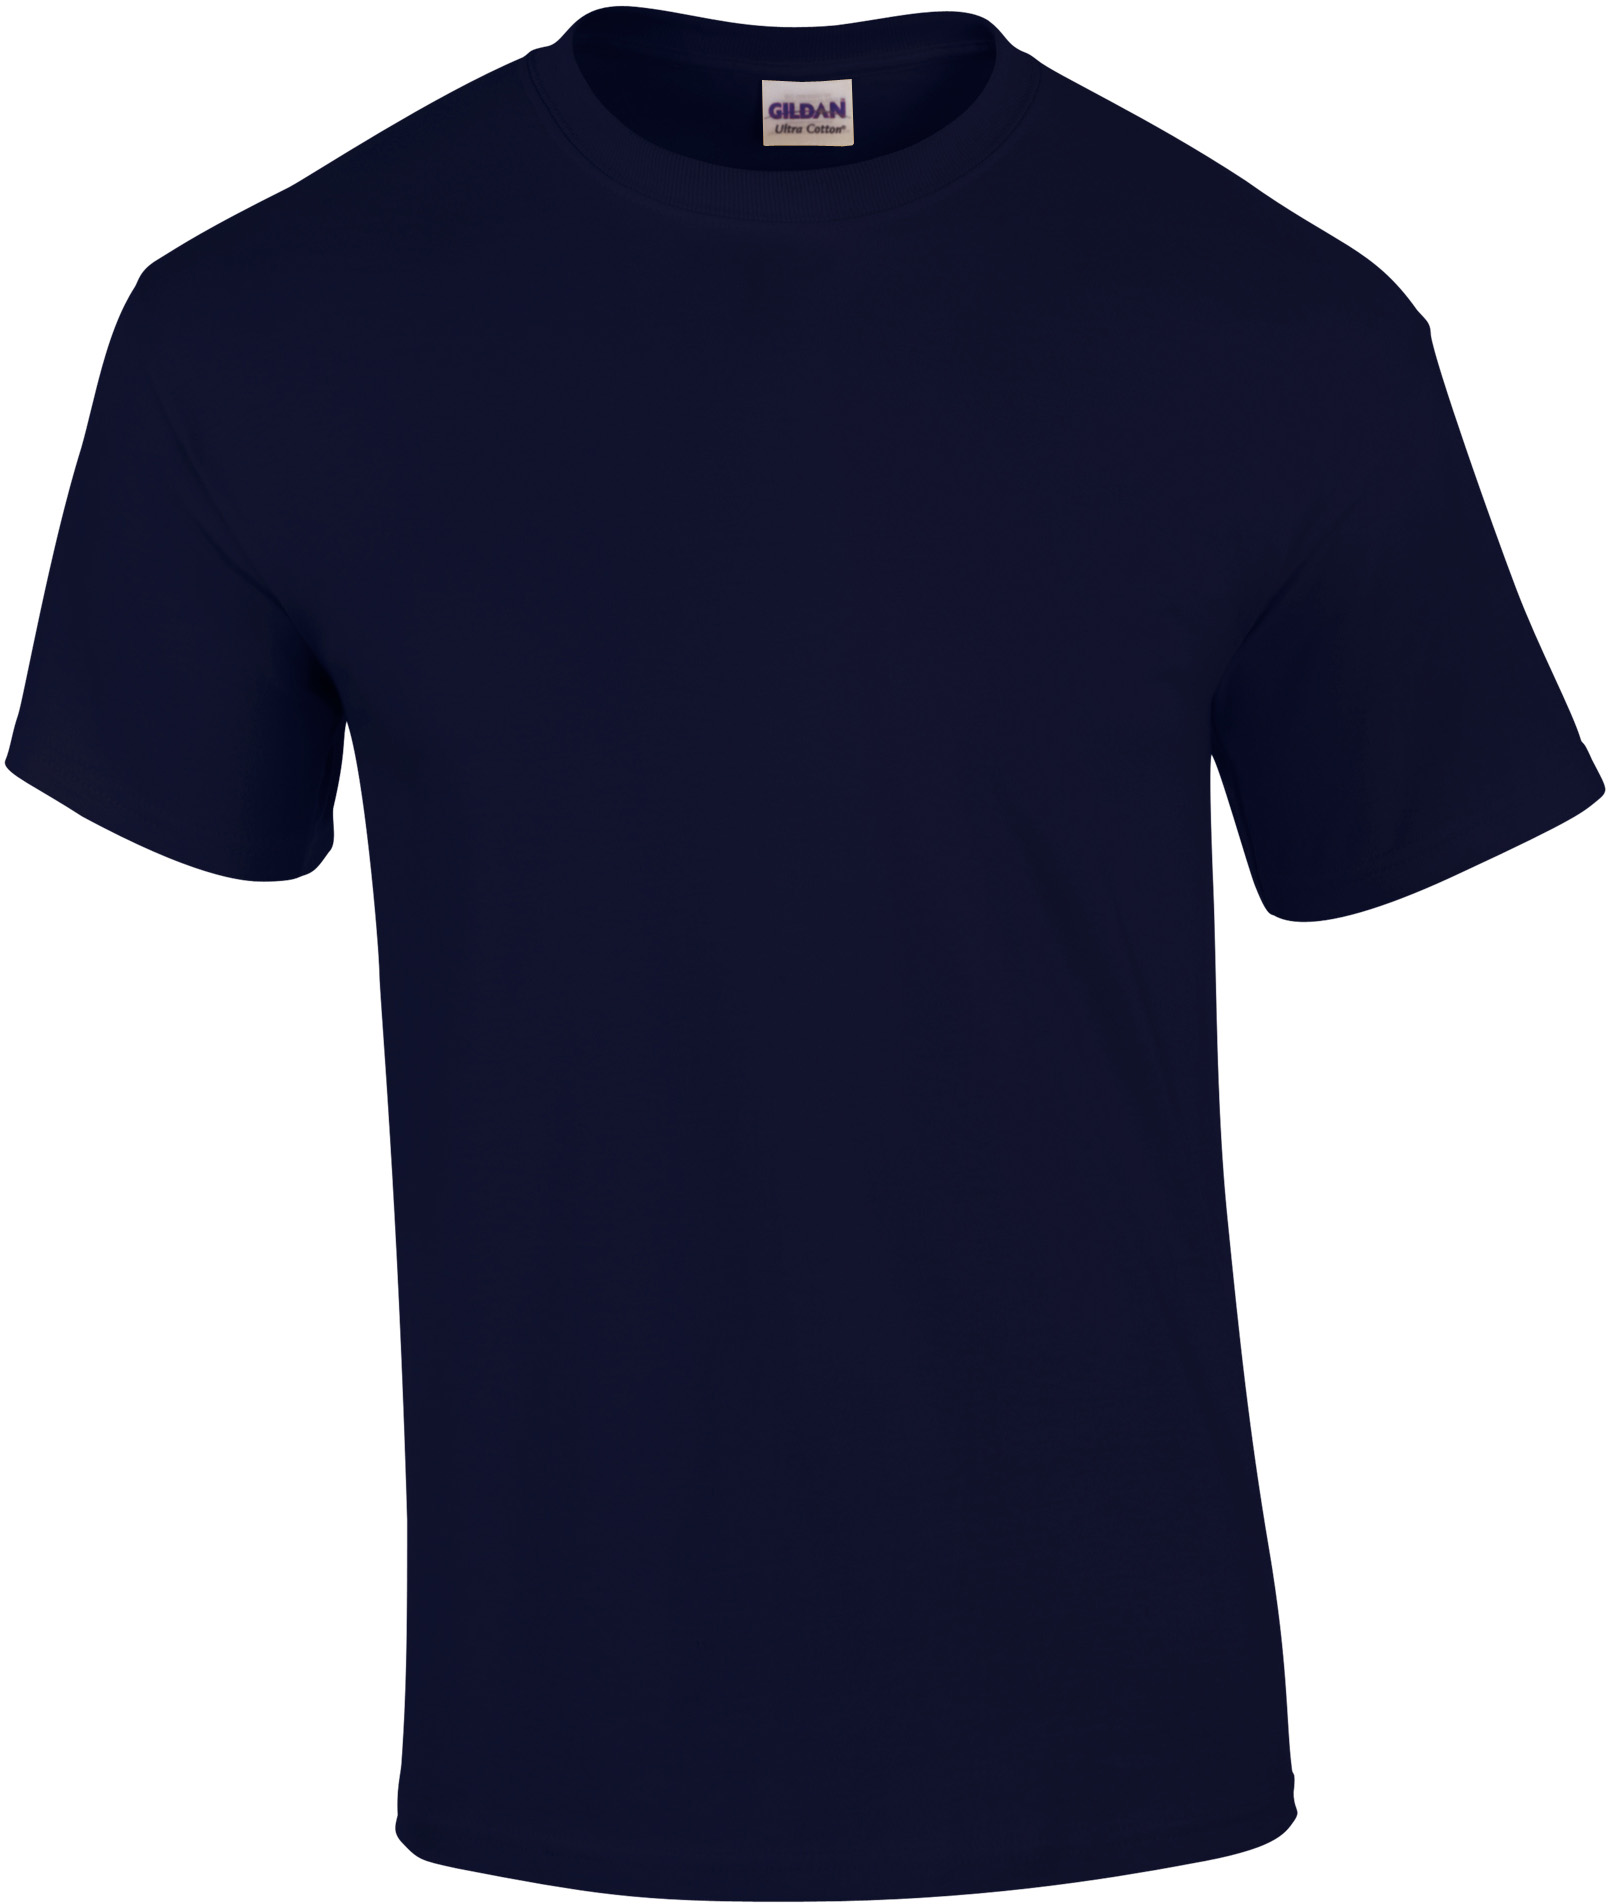 Tričko Gildan Ultra - Námořní modrá XXL